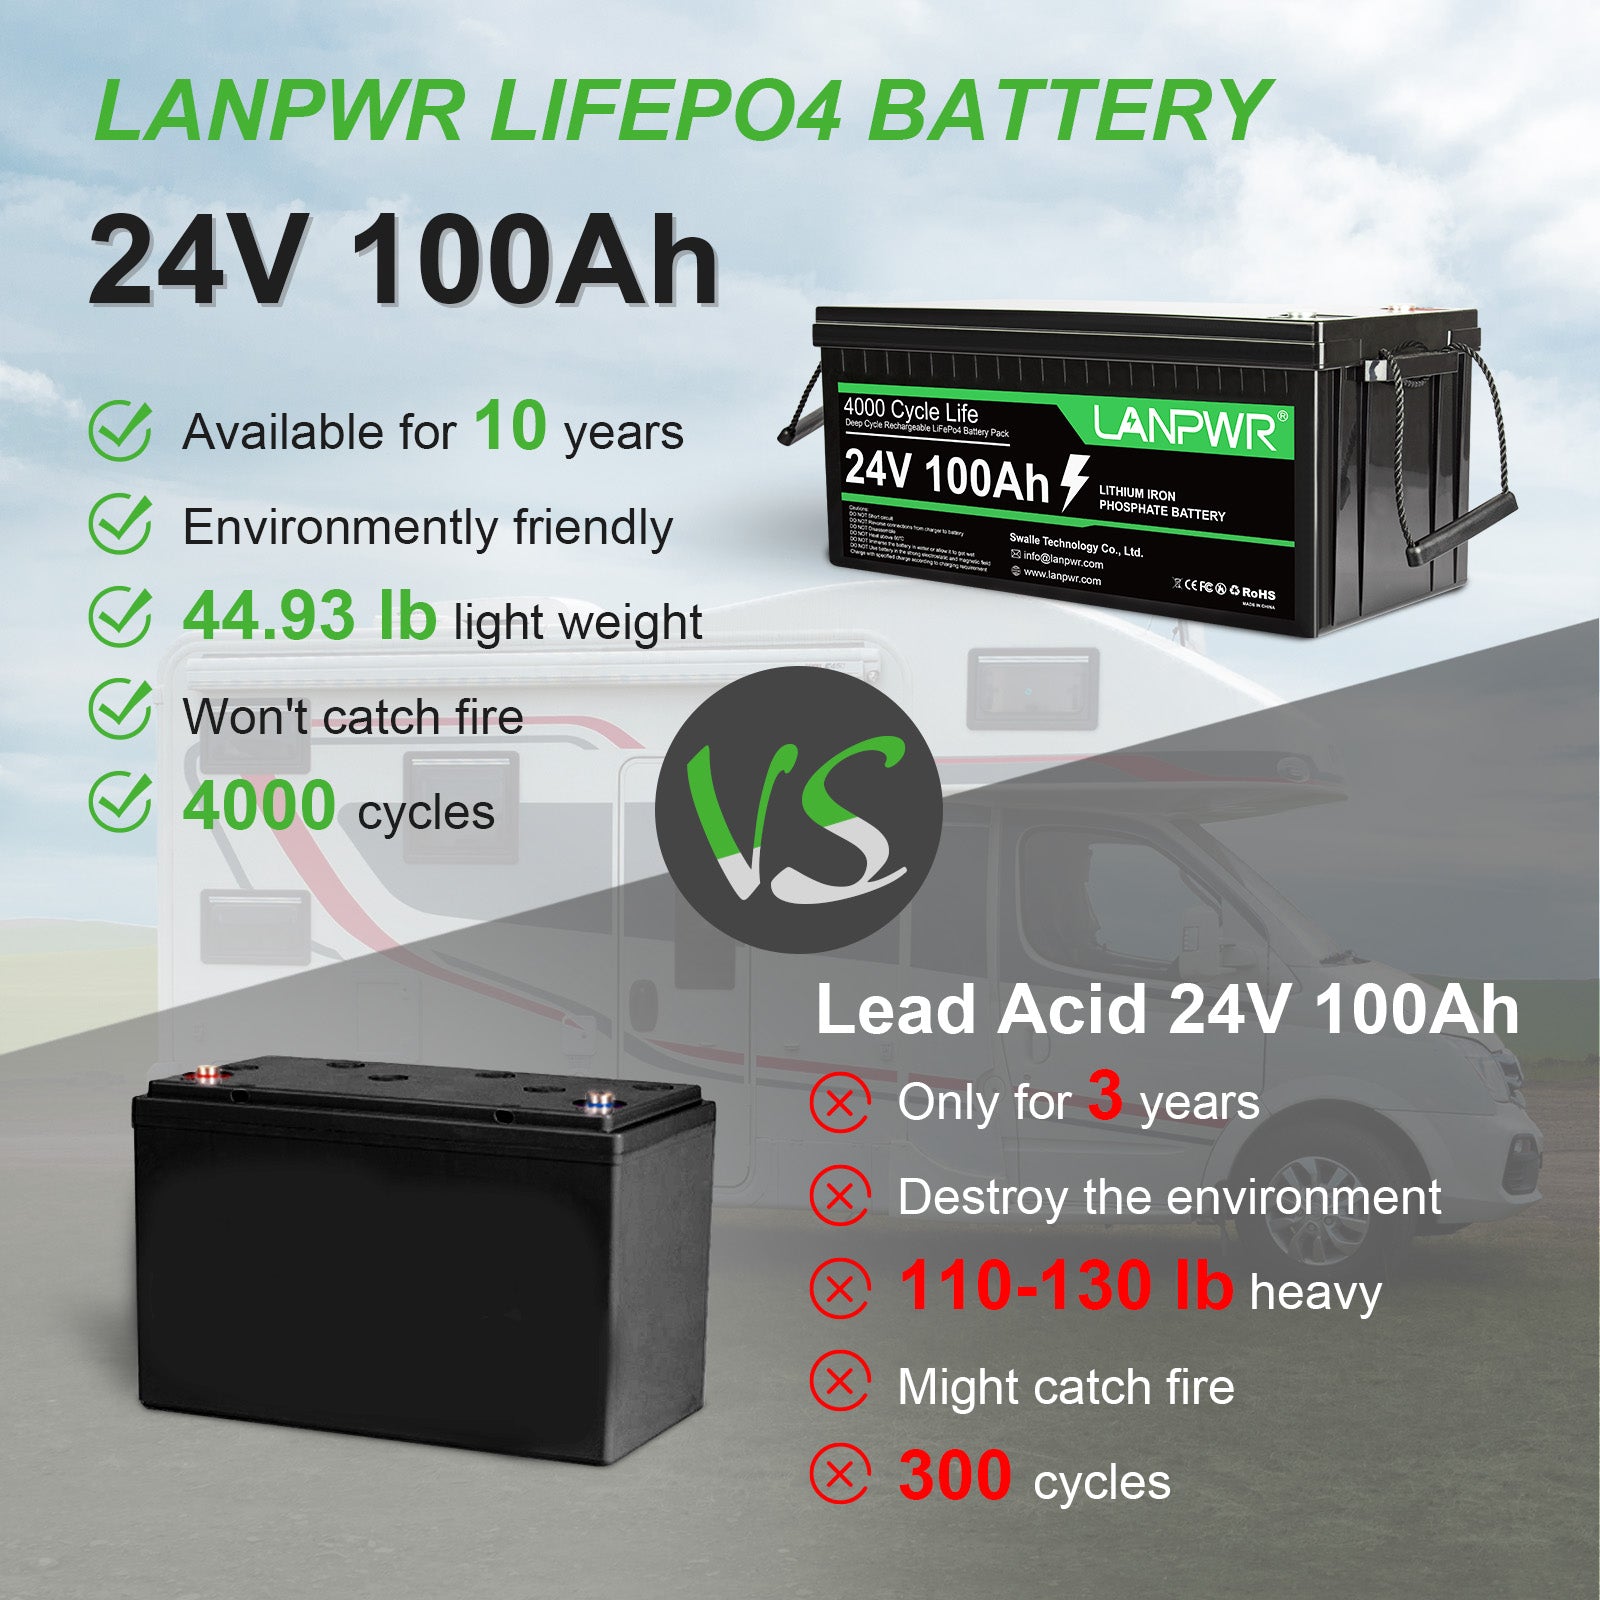 Lanpwr 24V 100Ah LiFePO4 Battery_ Build-In 100A BMS (8)zuc